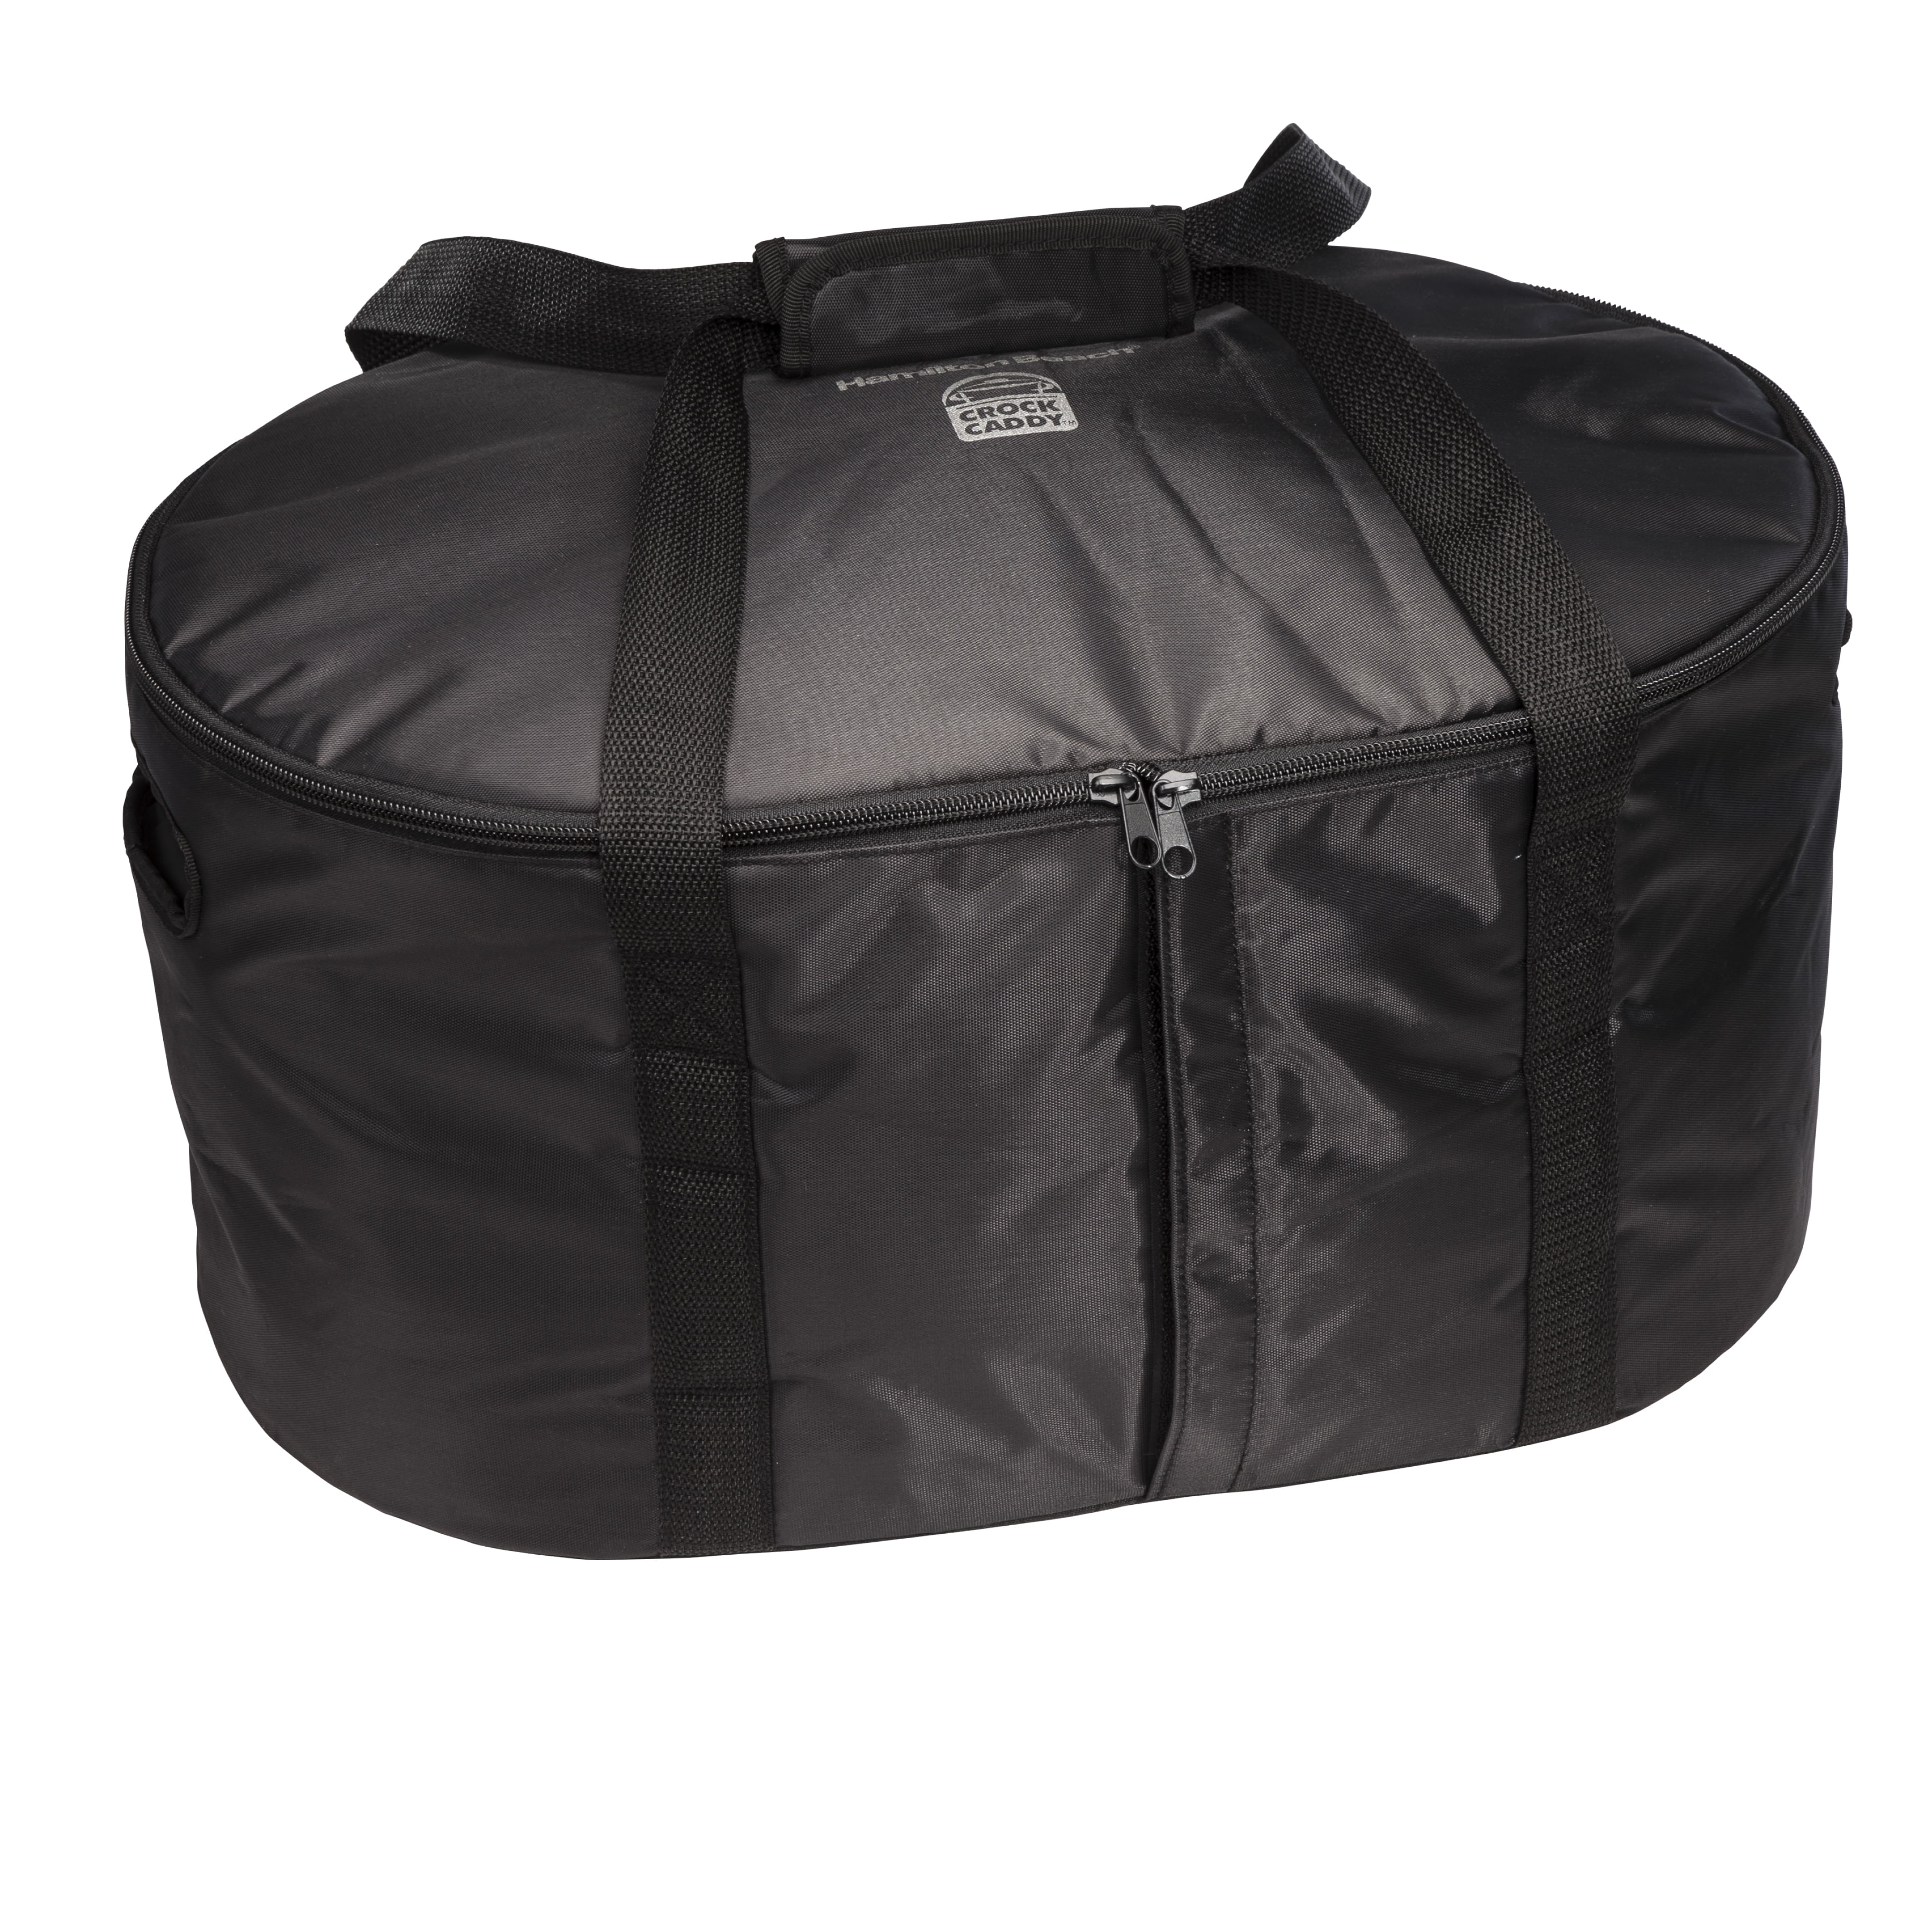 Hamilton Beach Brands Inc. 6849954 8 qt. Black Plastic Insulated Slow Cooker Bag